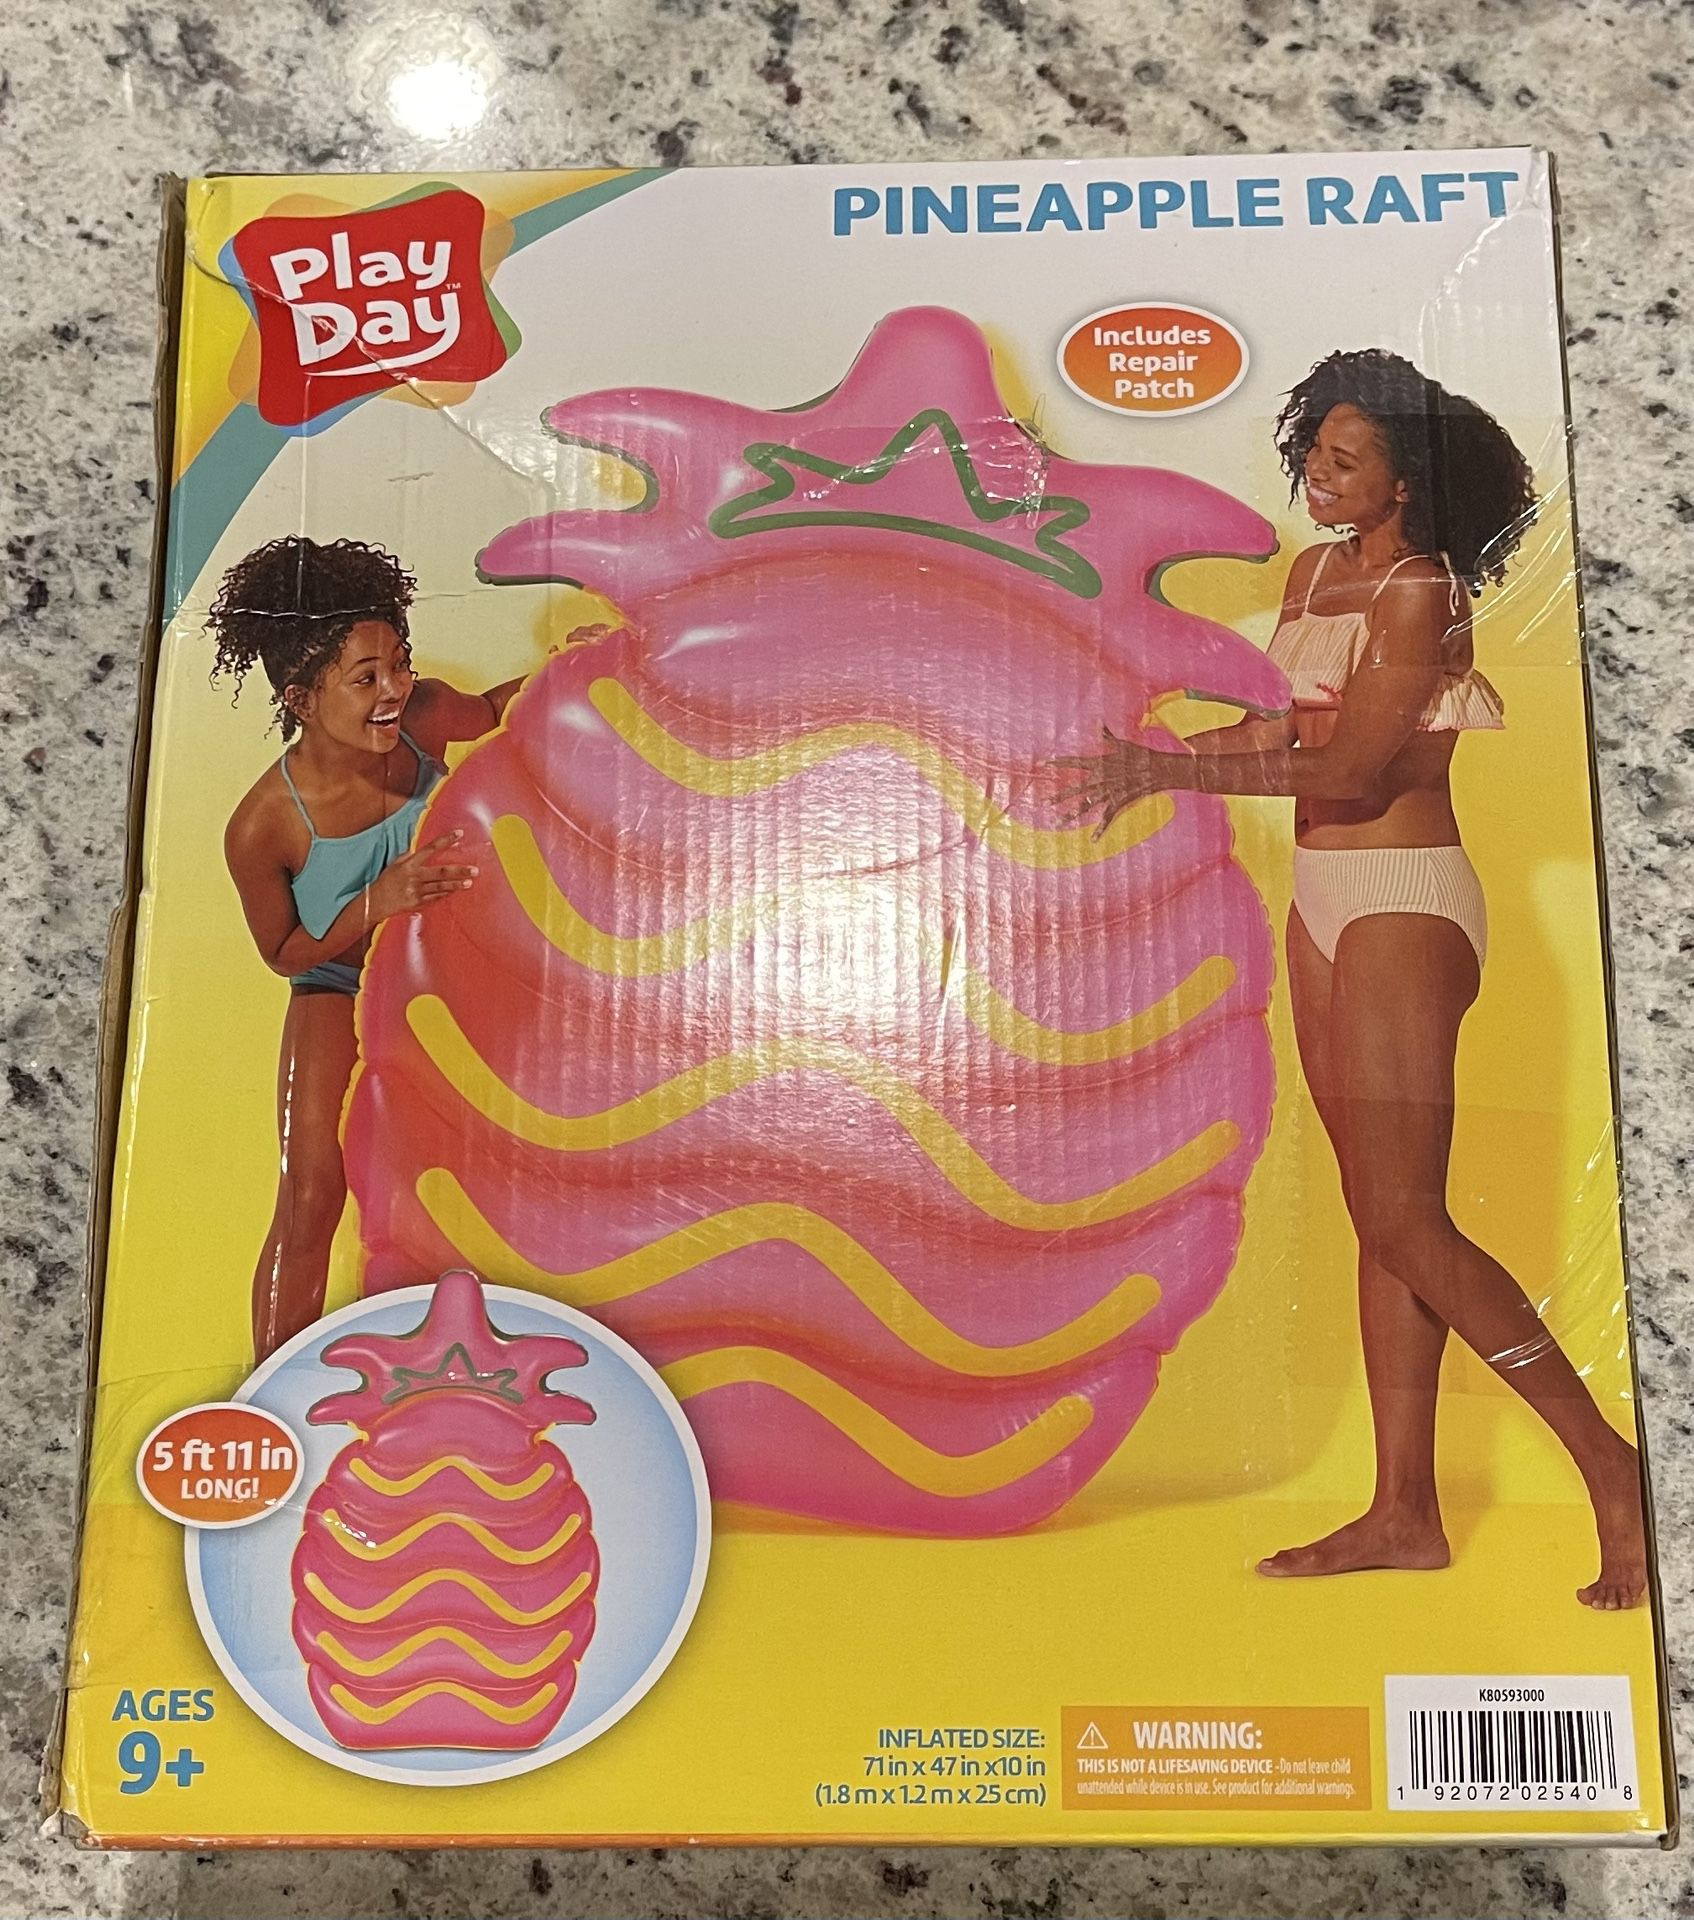 Pineapple Raft! 🍍